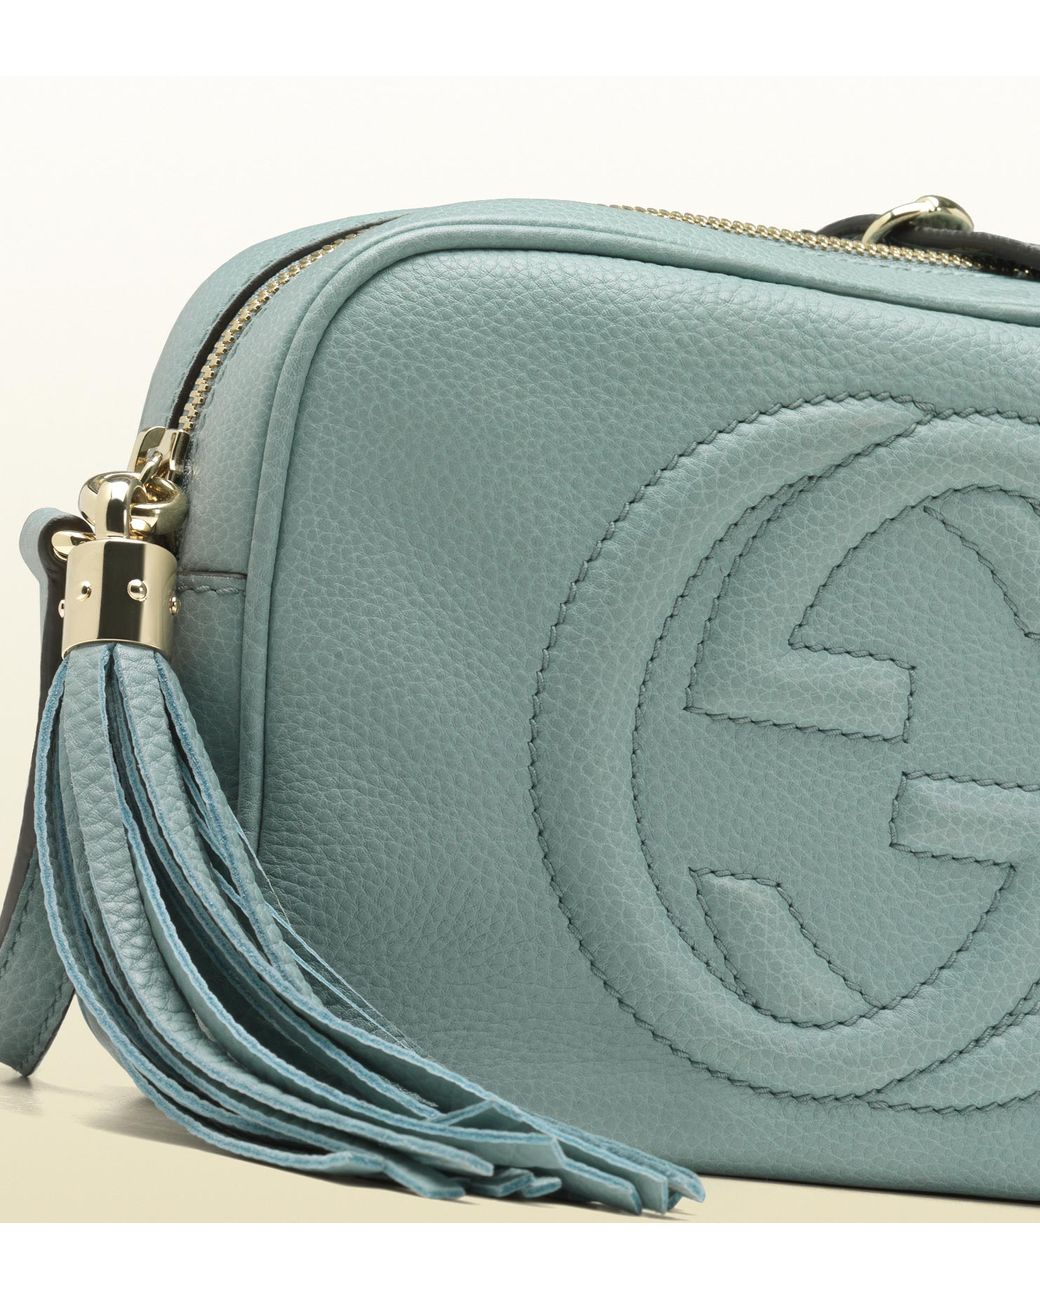 Gucci Soho Light Blue Bag |